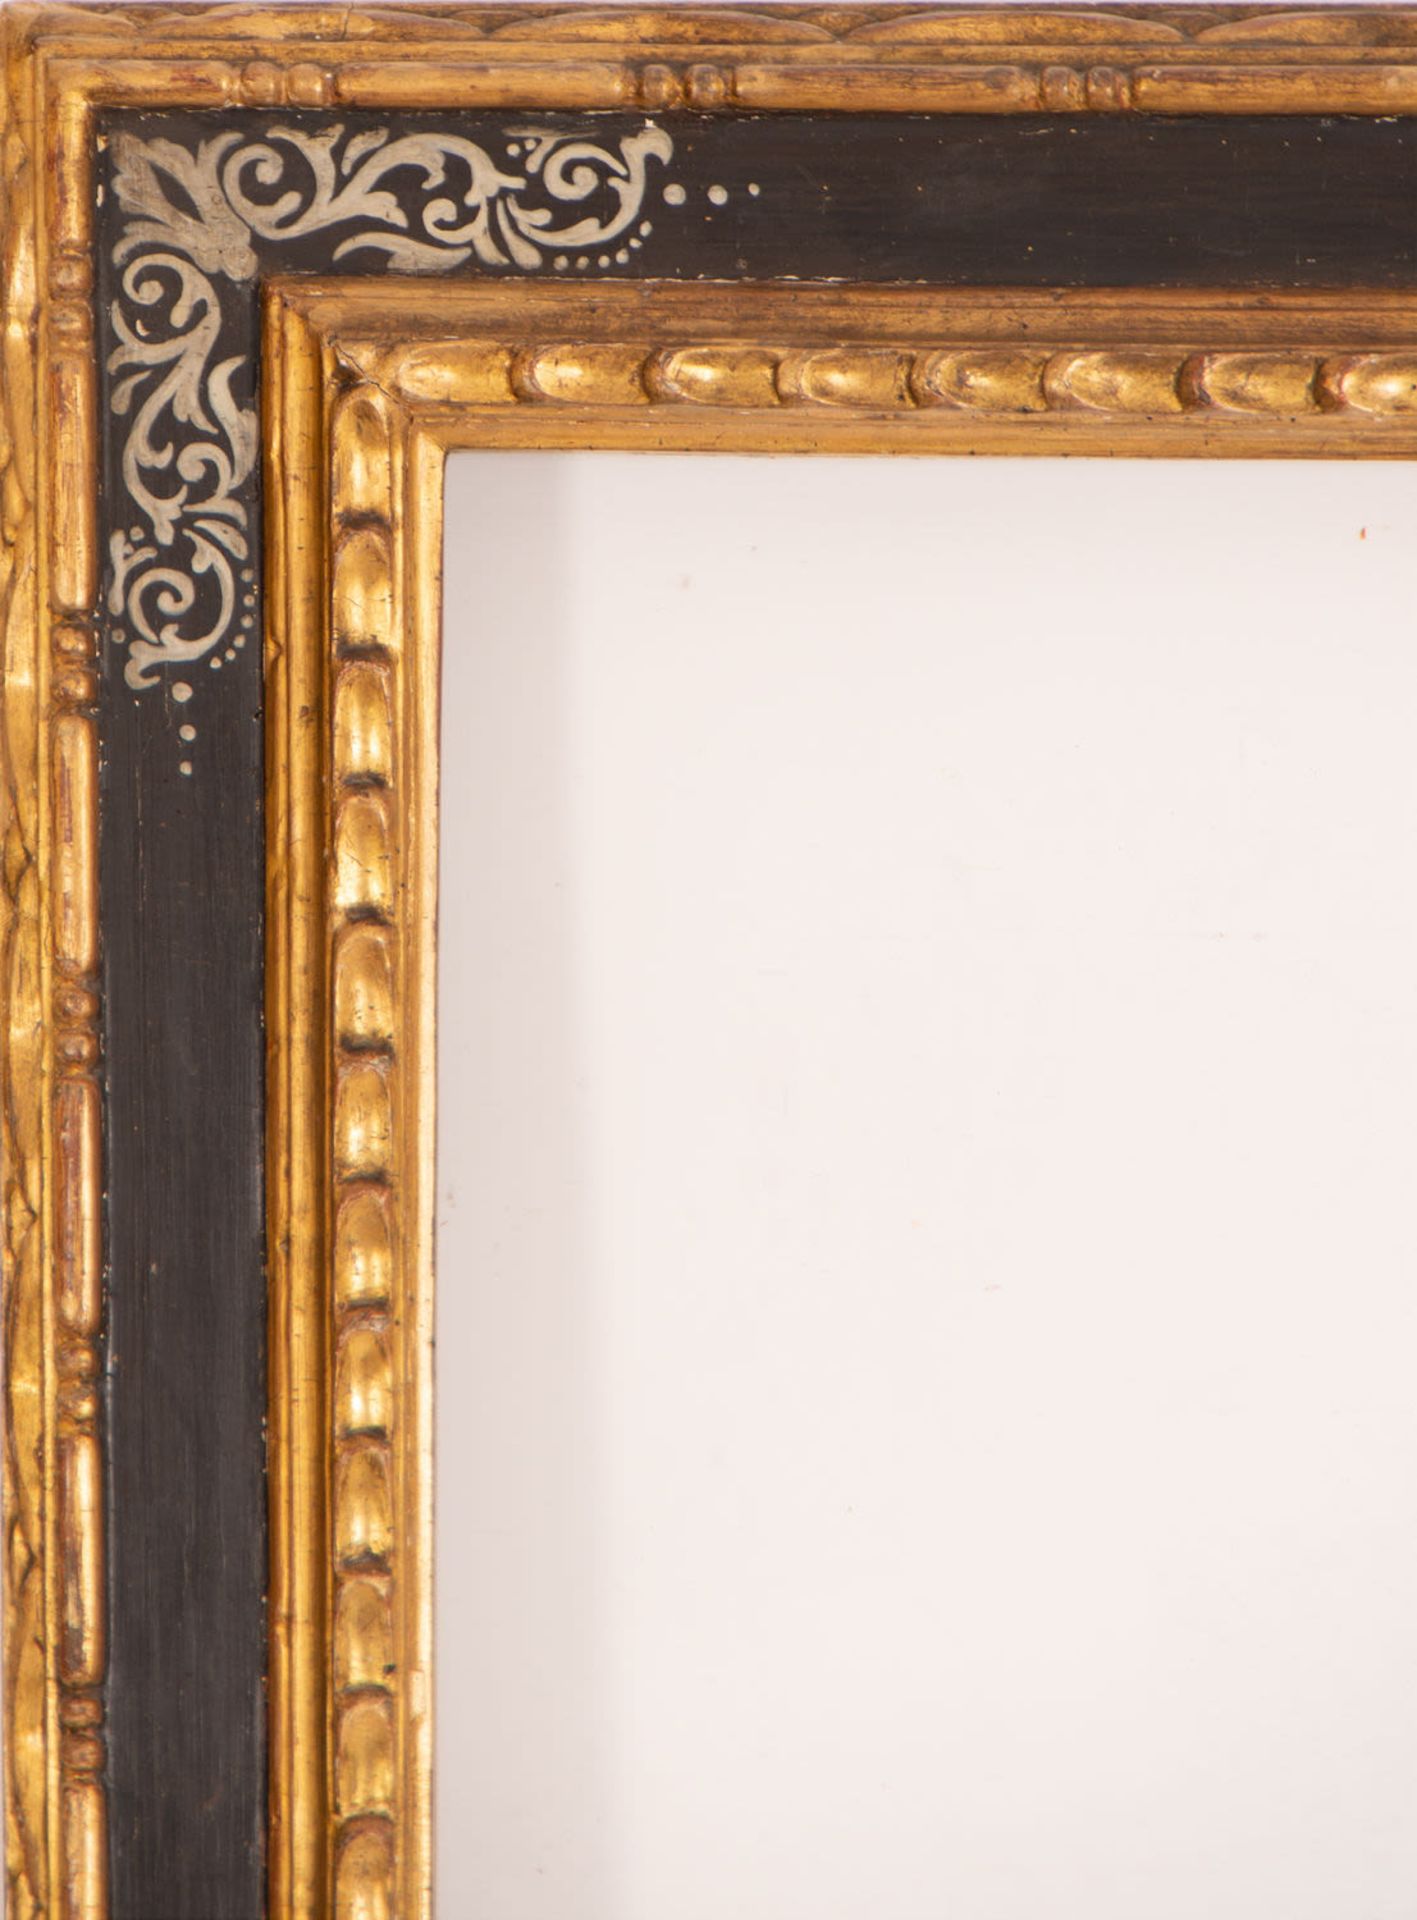 Tuscan Cassetta type frame, Italy, 18th century - Image 2 of 7